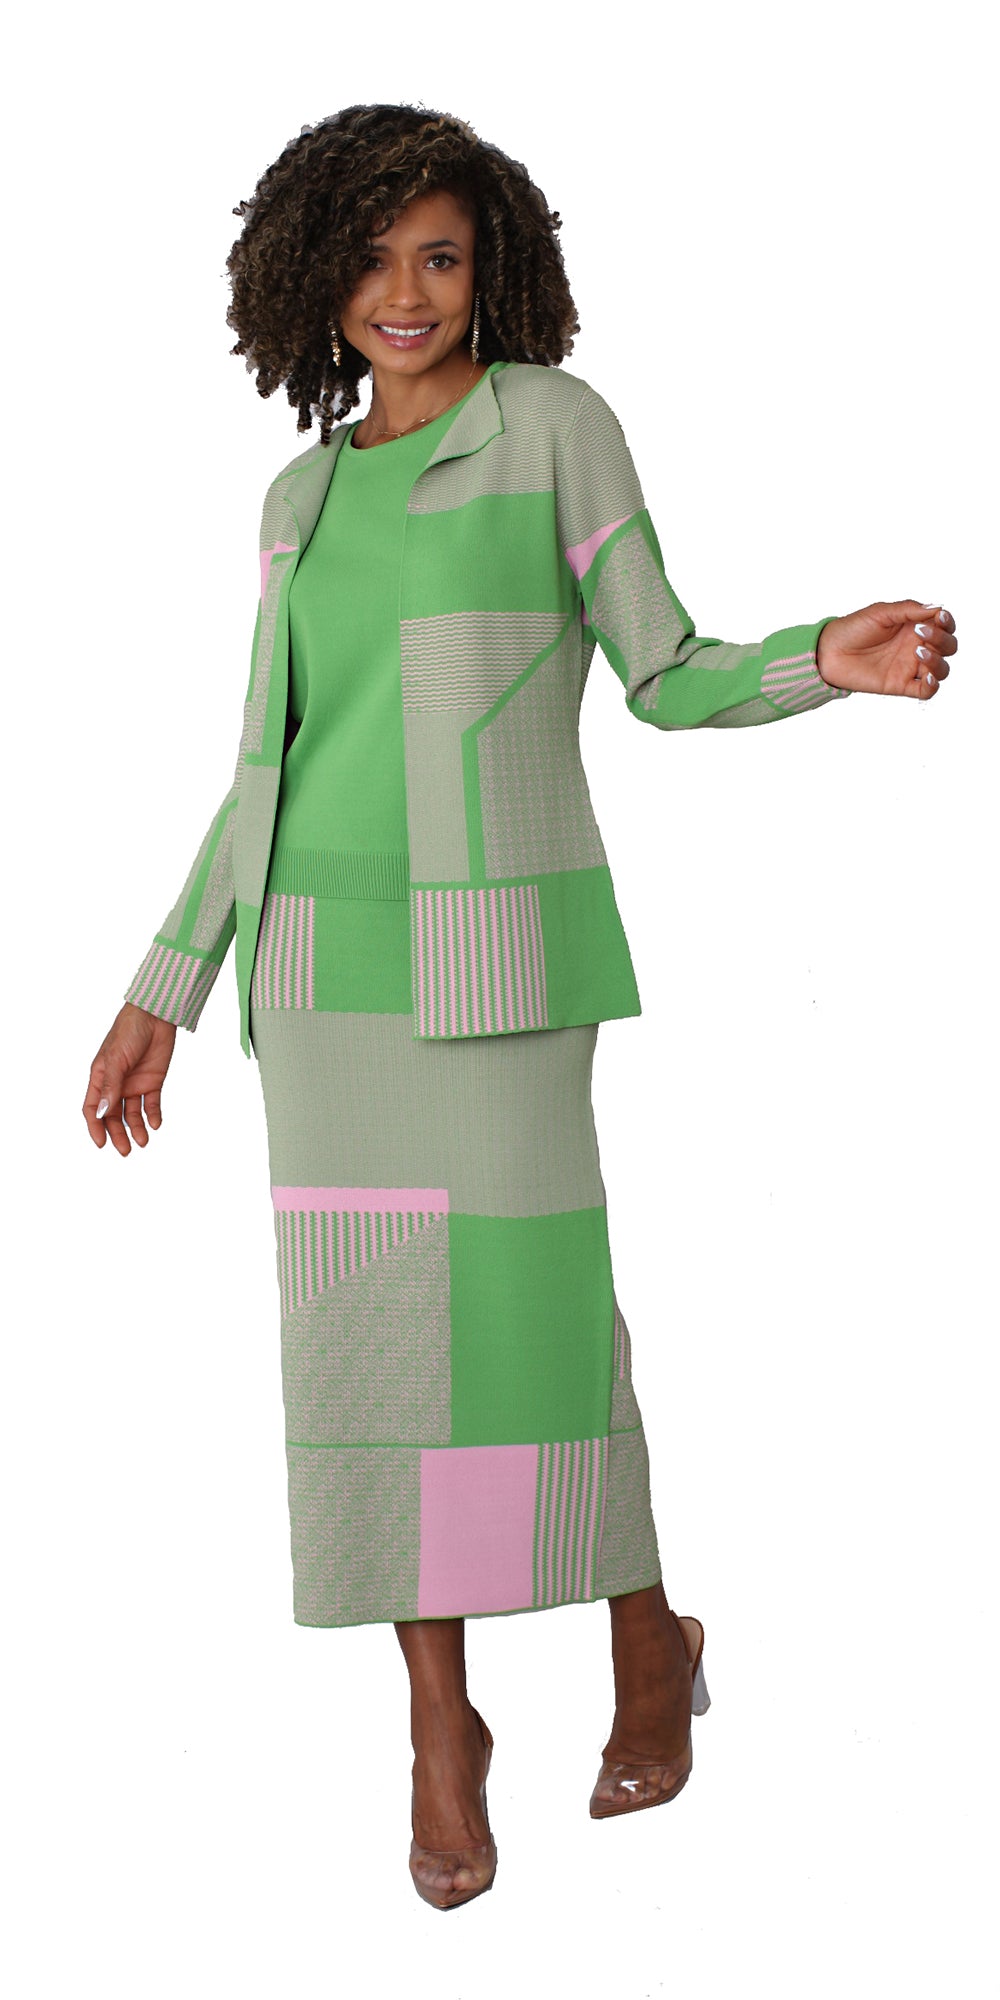 Kayla 5309 - Pink Green - 3 PC Knit Jacket, Cami and Skirt Set